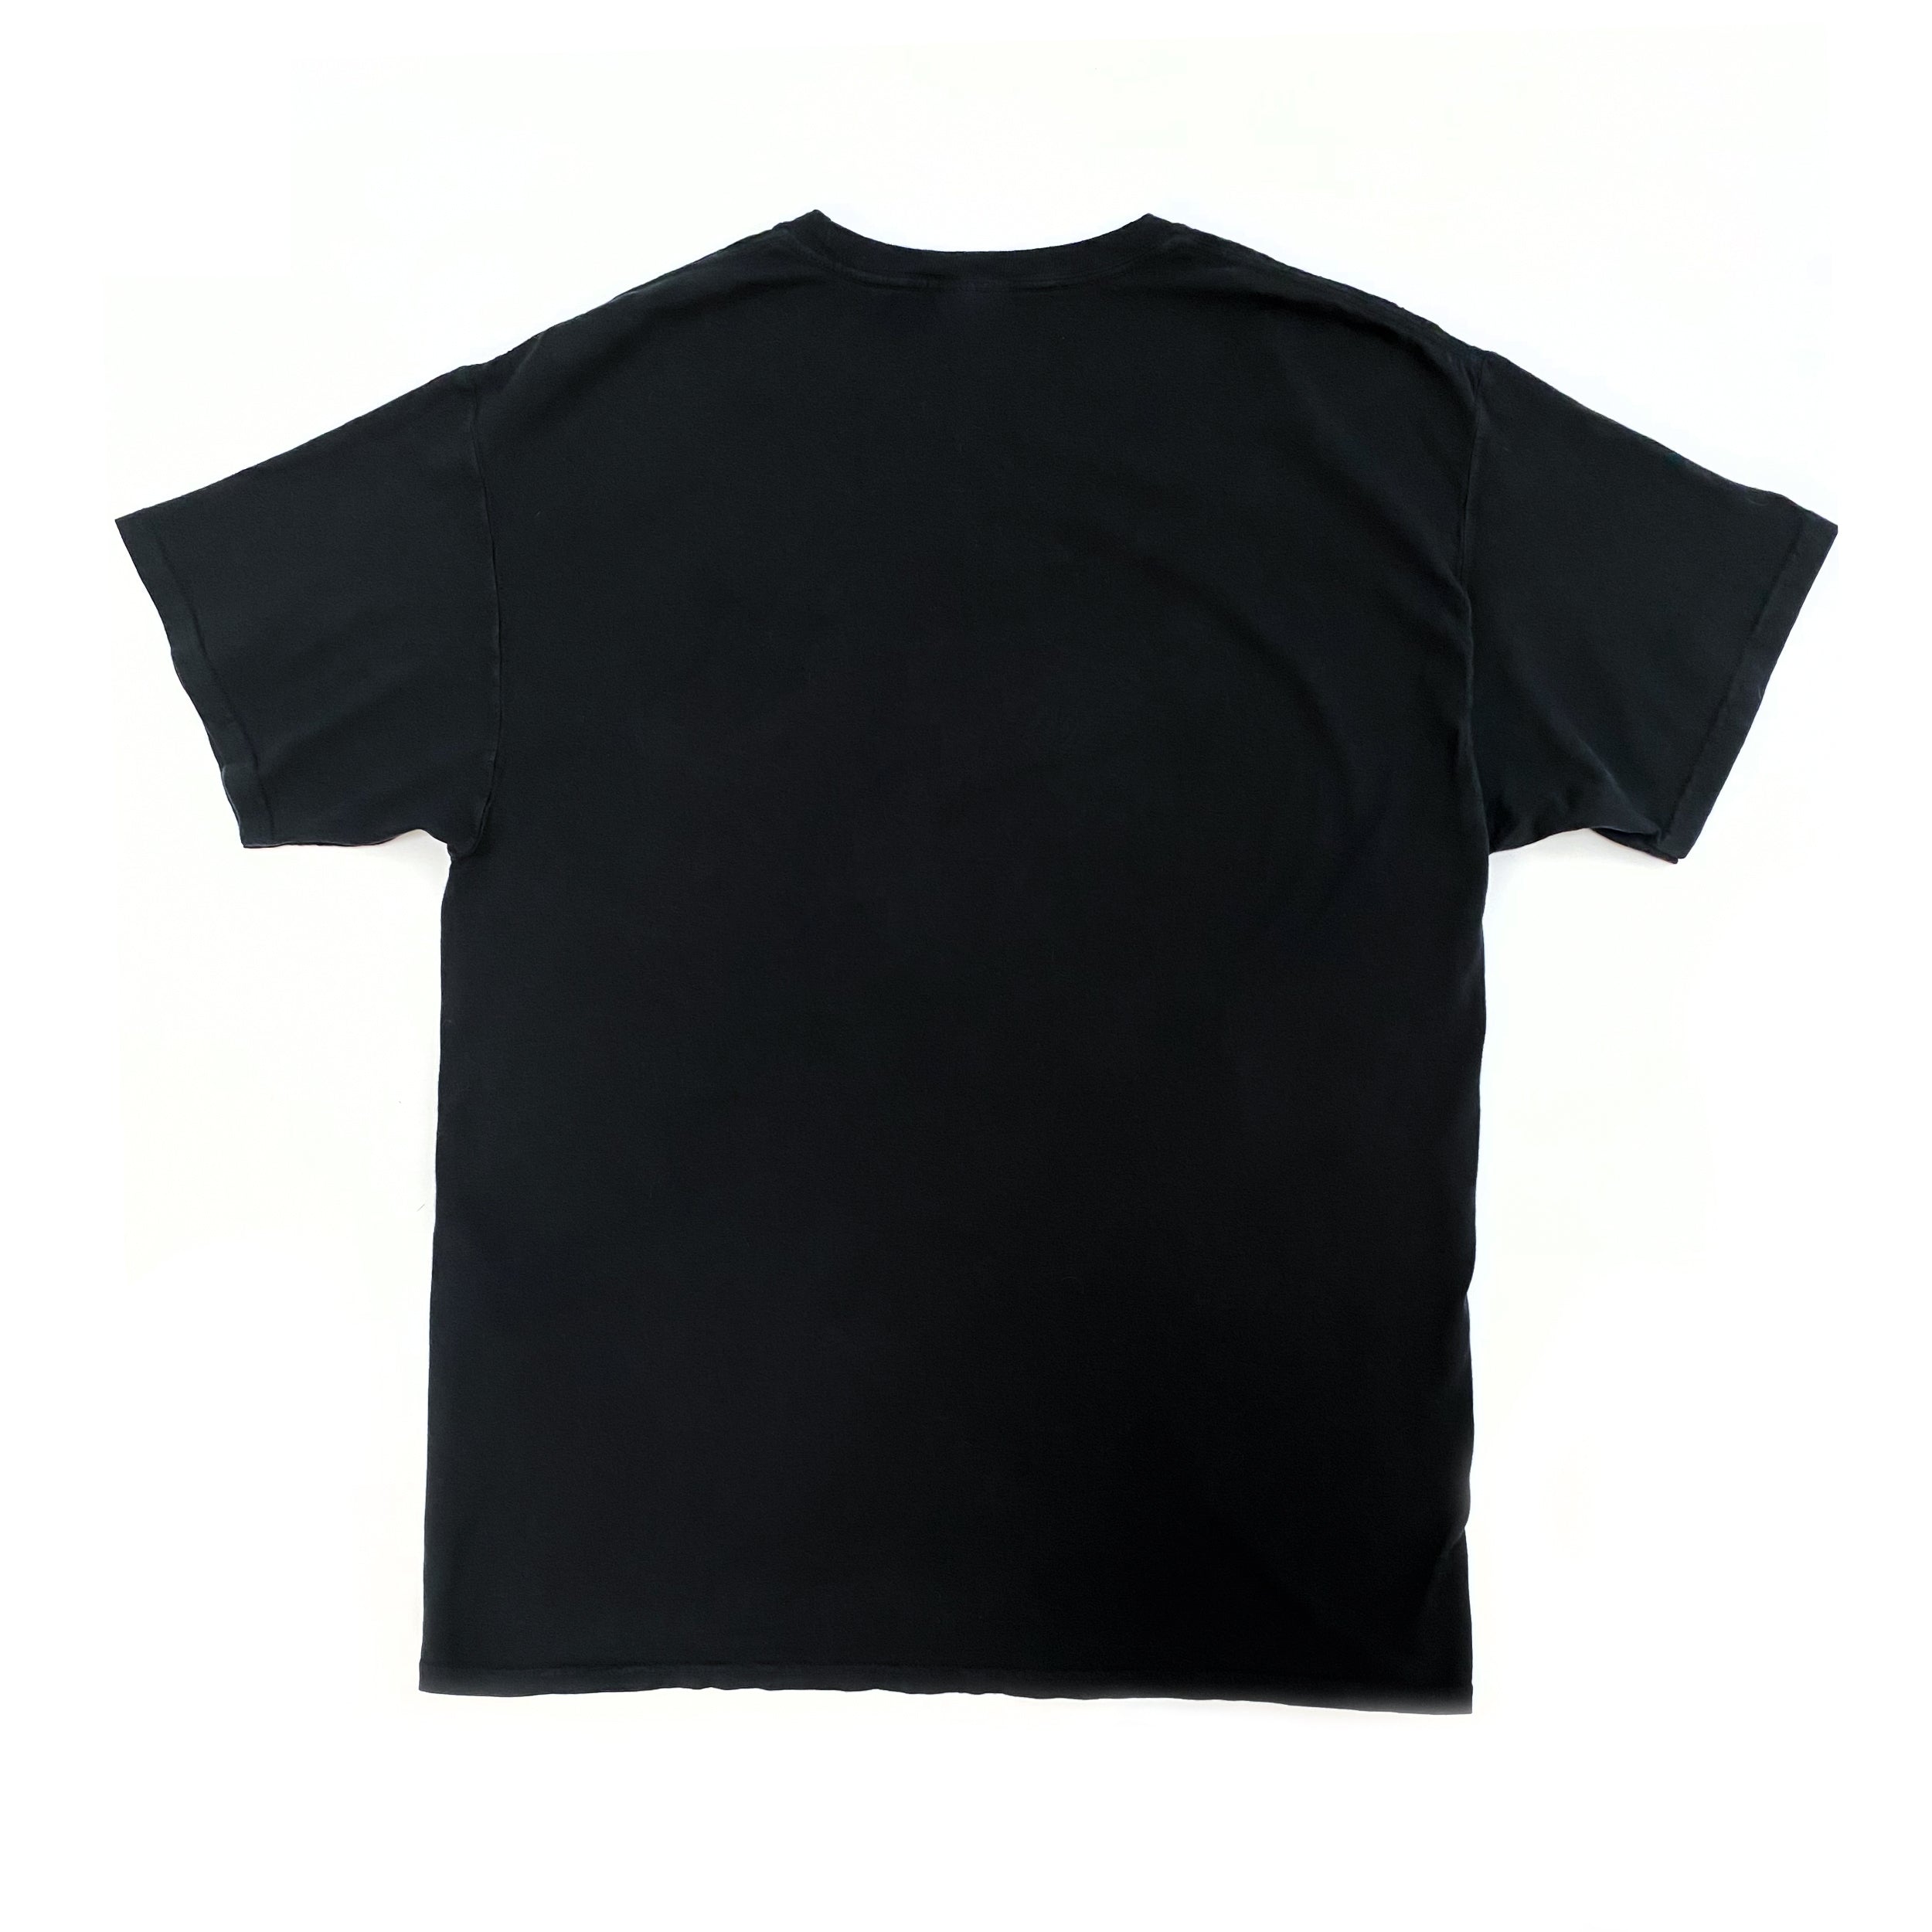 black t shirt front